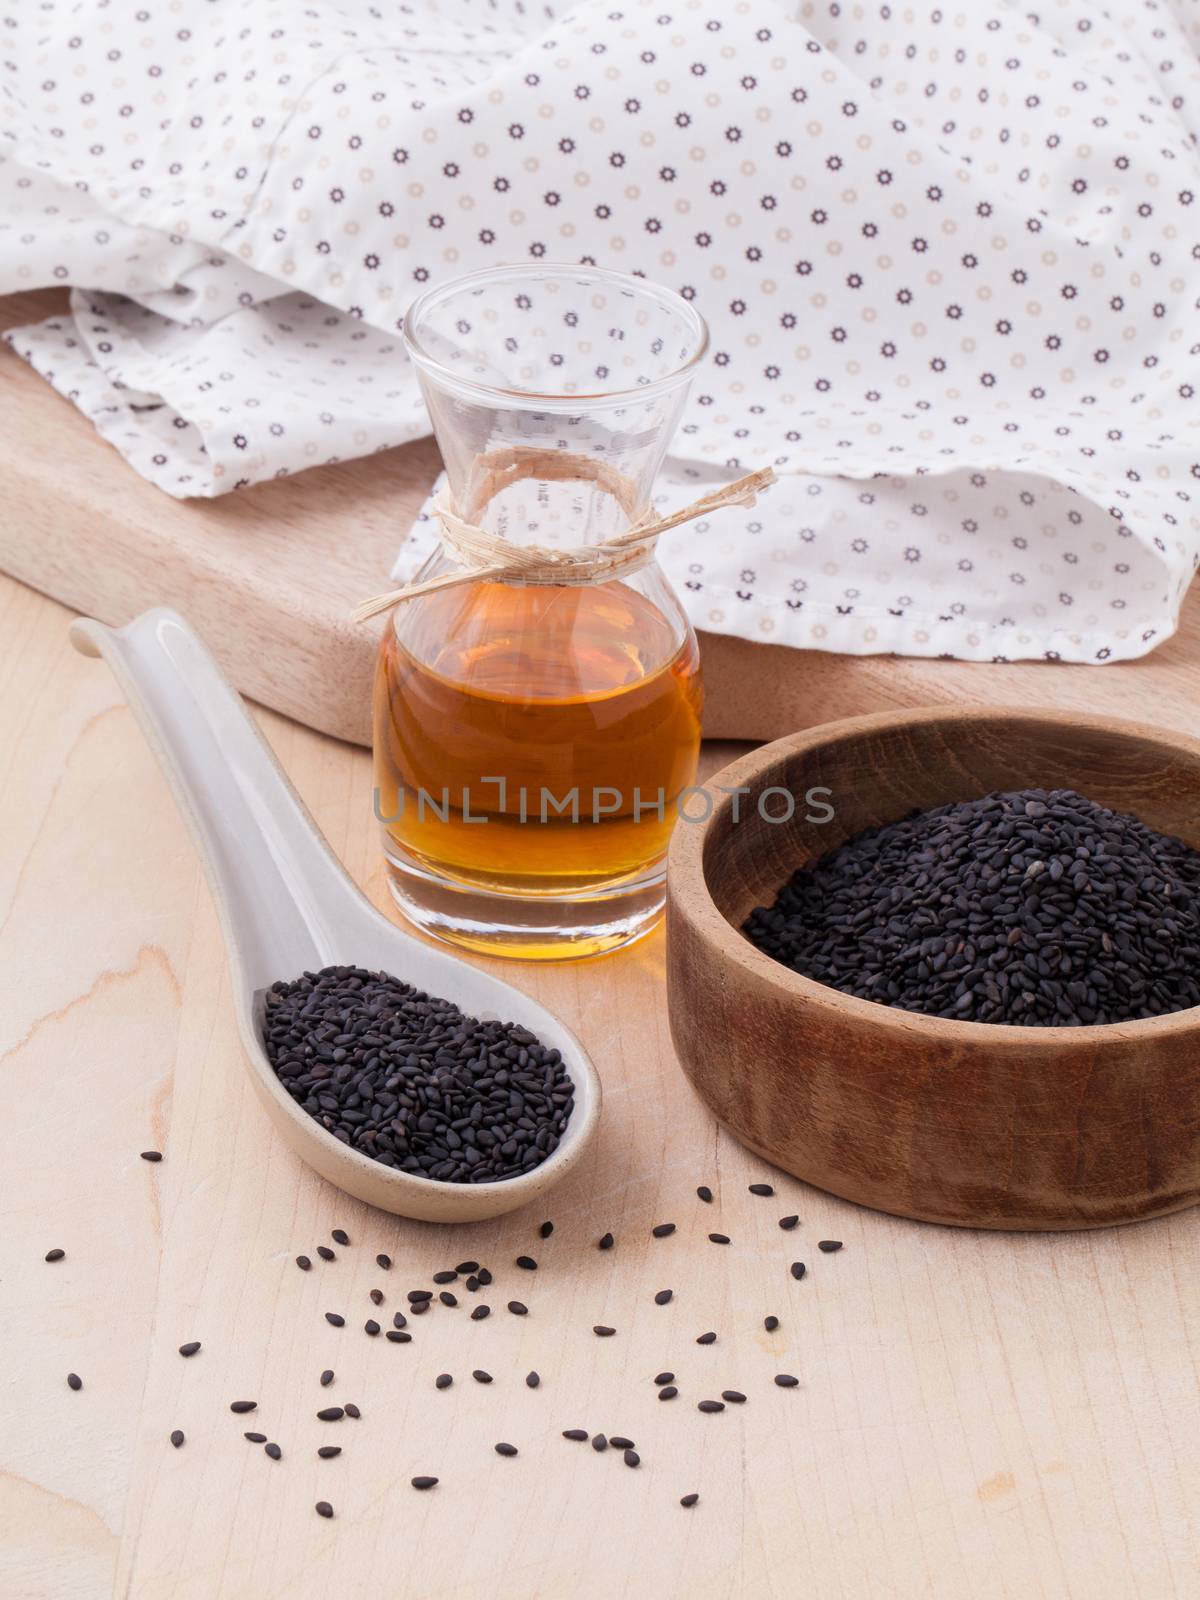 Black sesame oil and sesame seeds set up on wooden table